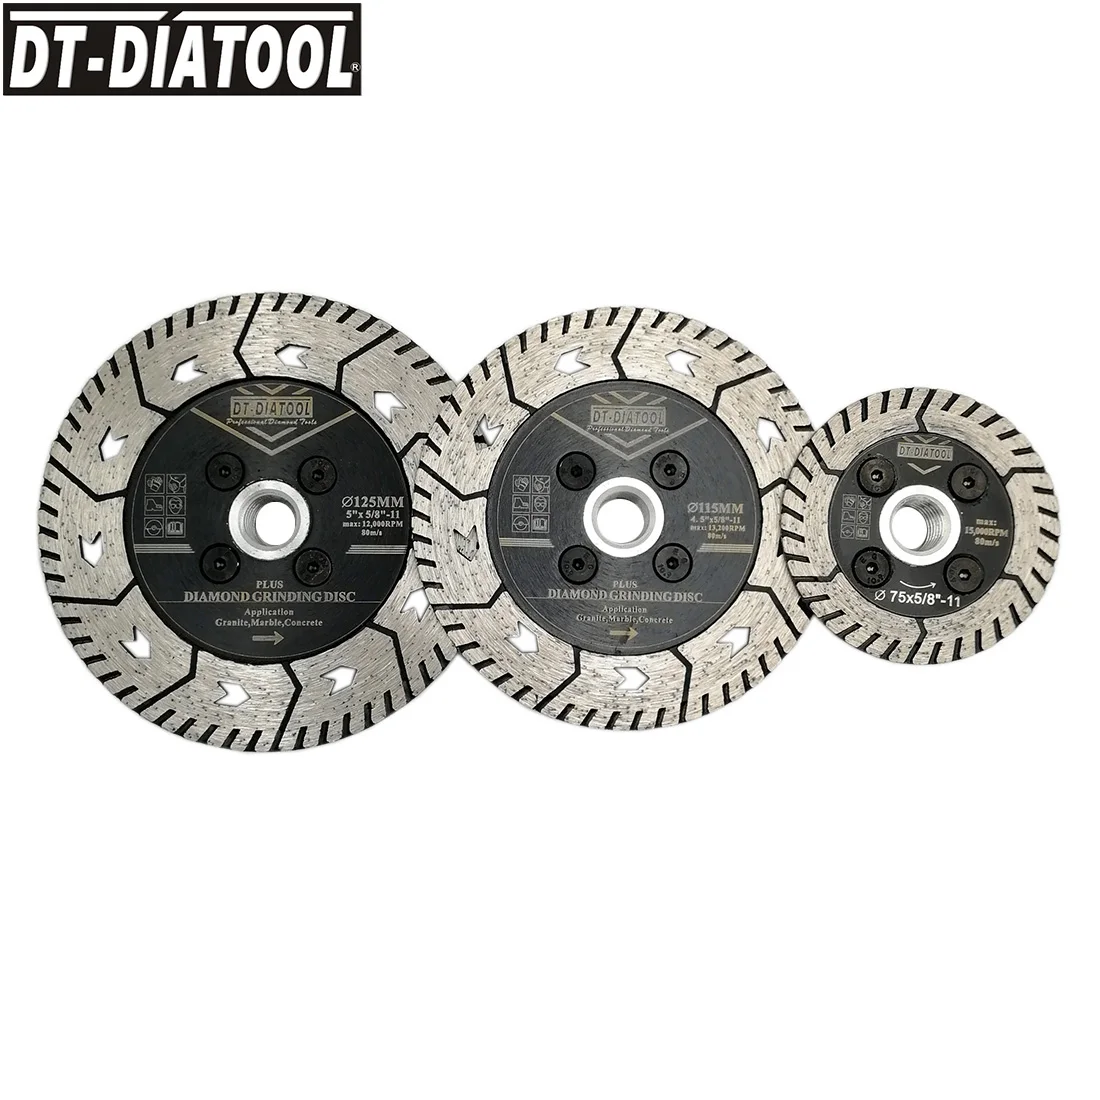 

DT-DIATOOL 1pc/2pcs 75MM 115mm or125mm Diamond Cutting Grindng Disc Cut Grind Sharpen Granite Marble Concrete